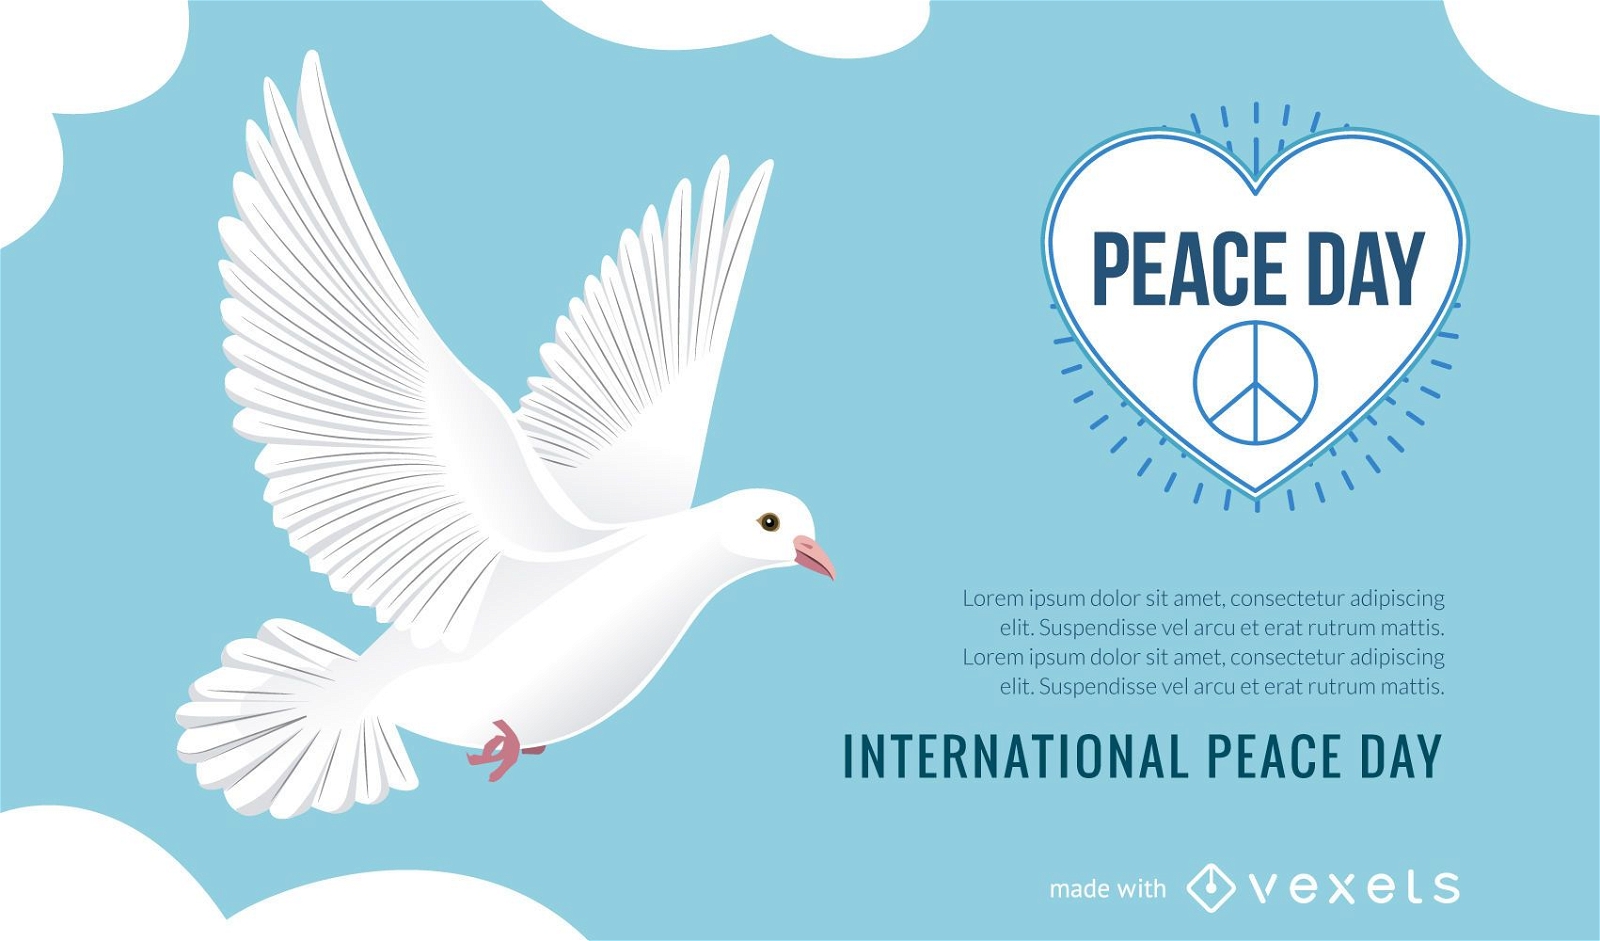 International Peace Day poster maker